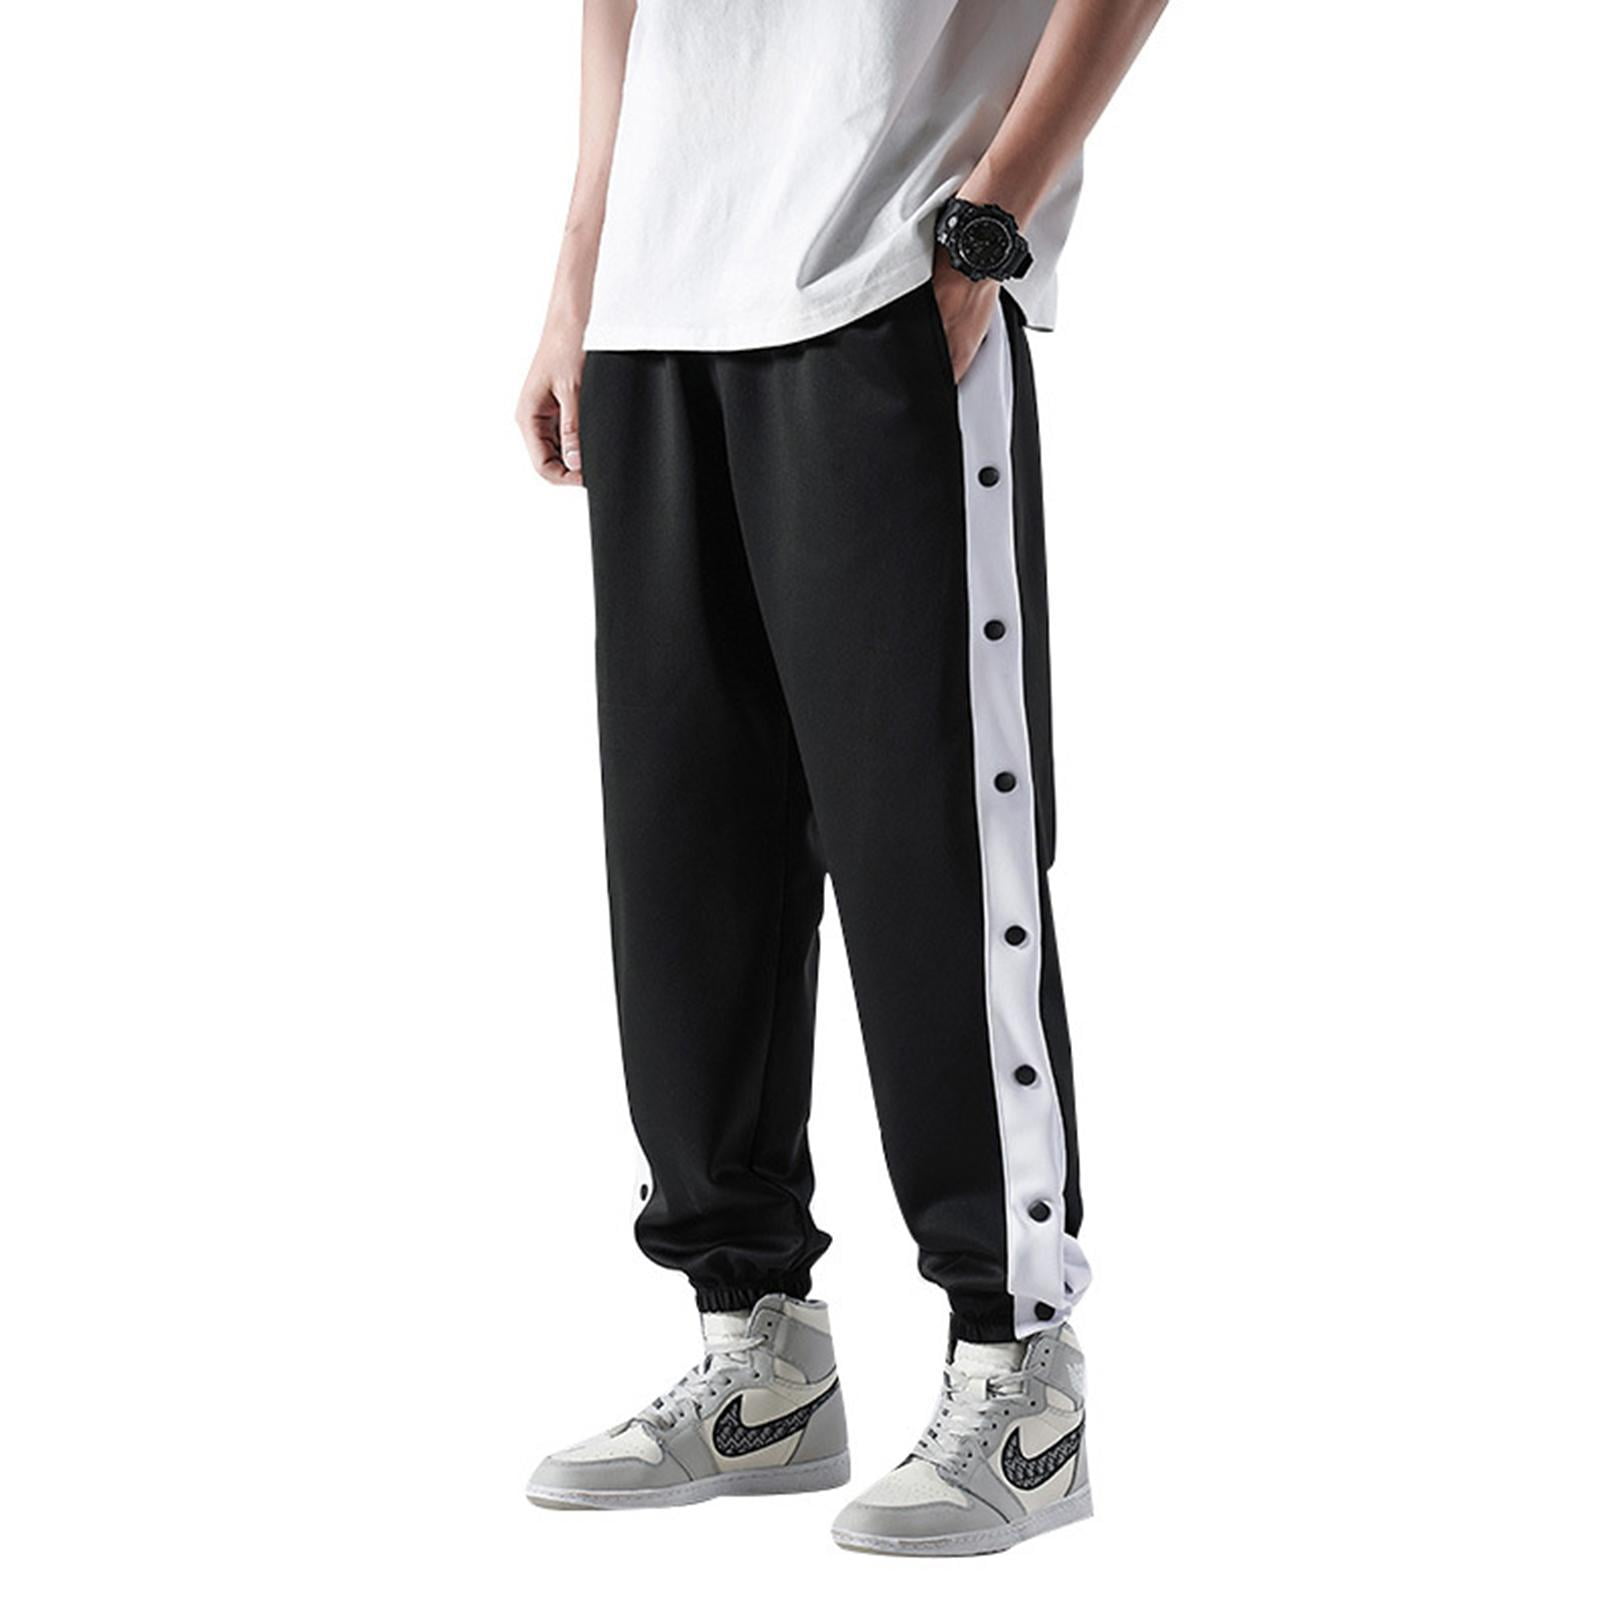 Men's Tearaway Pants Basketball Workout Sweatpants High Split Snap Button  Loose Post-Surgery Pants 